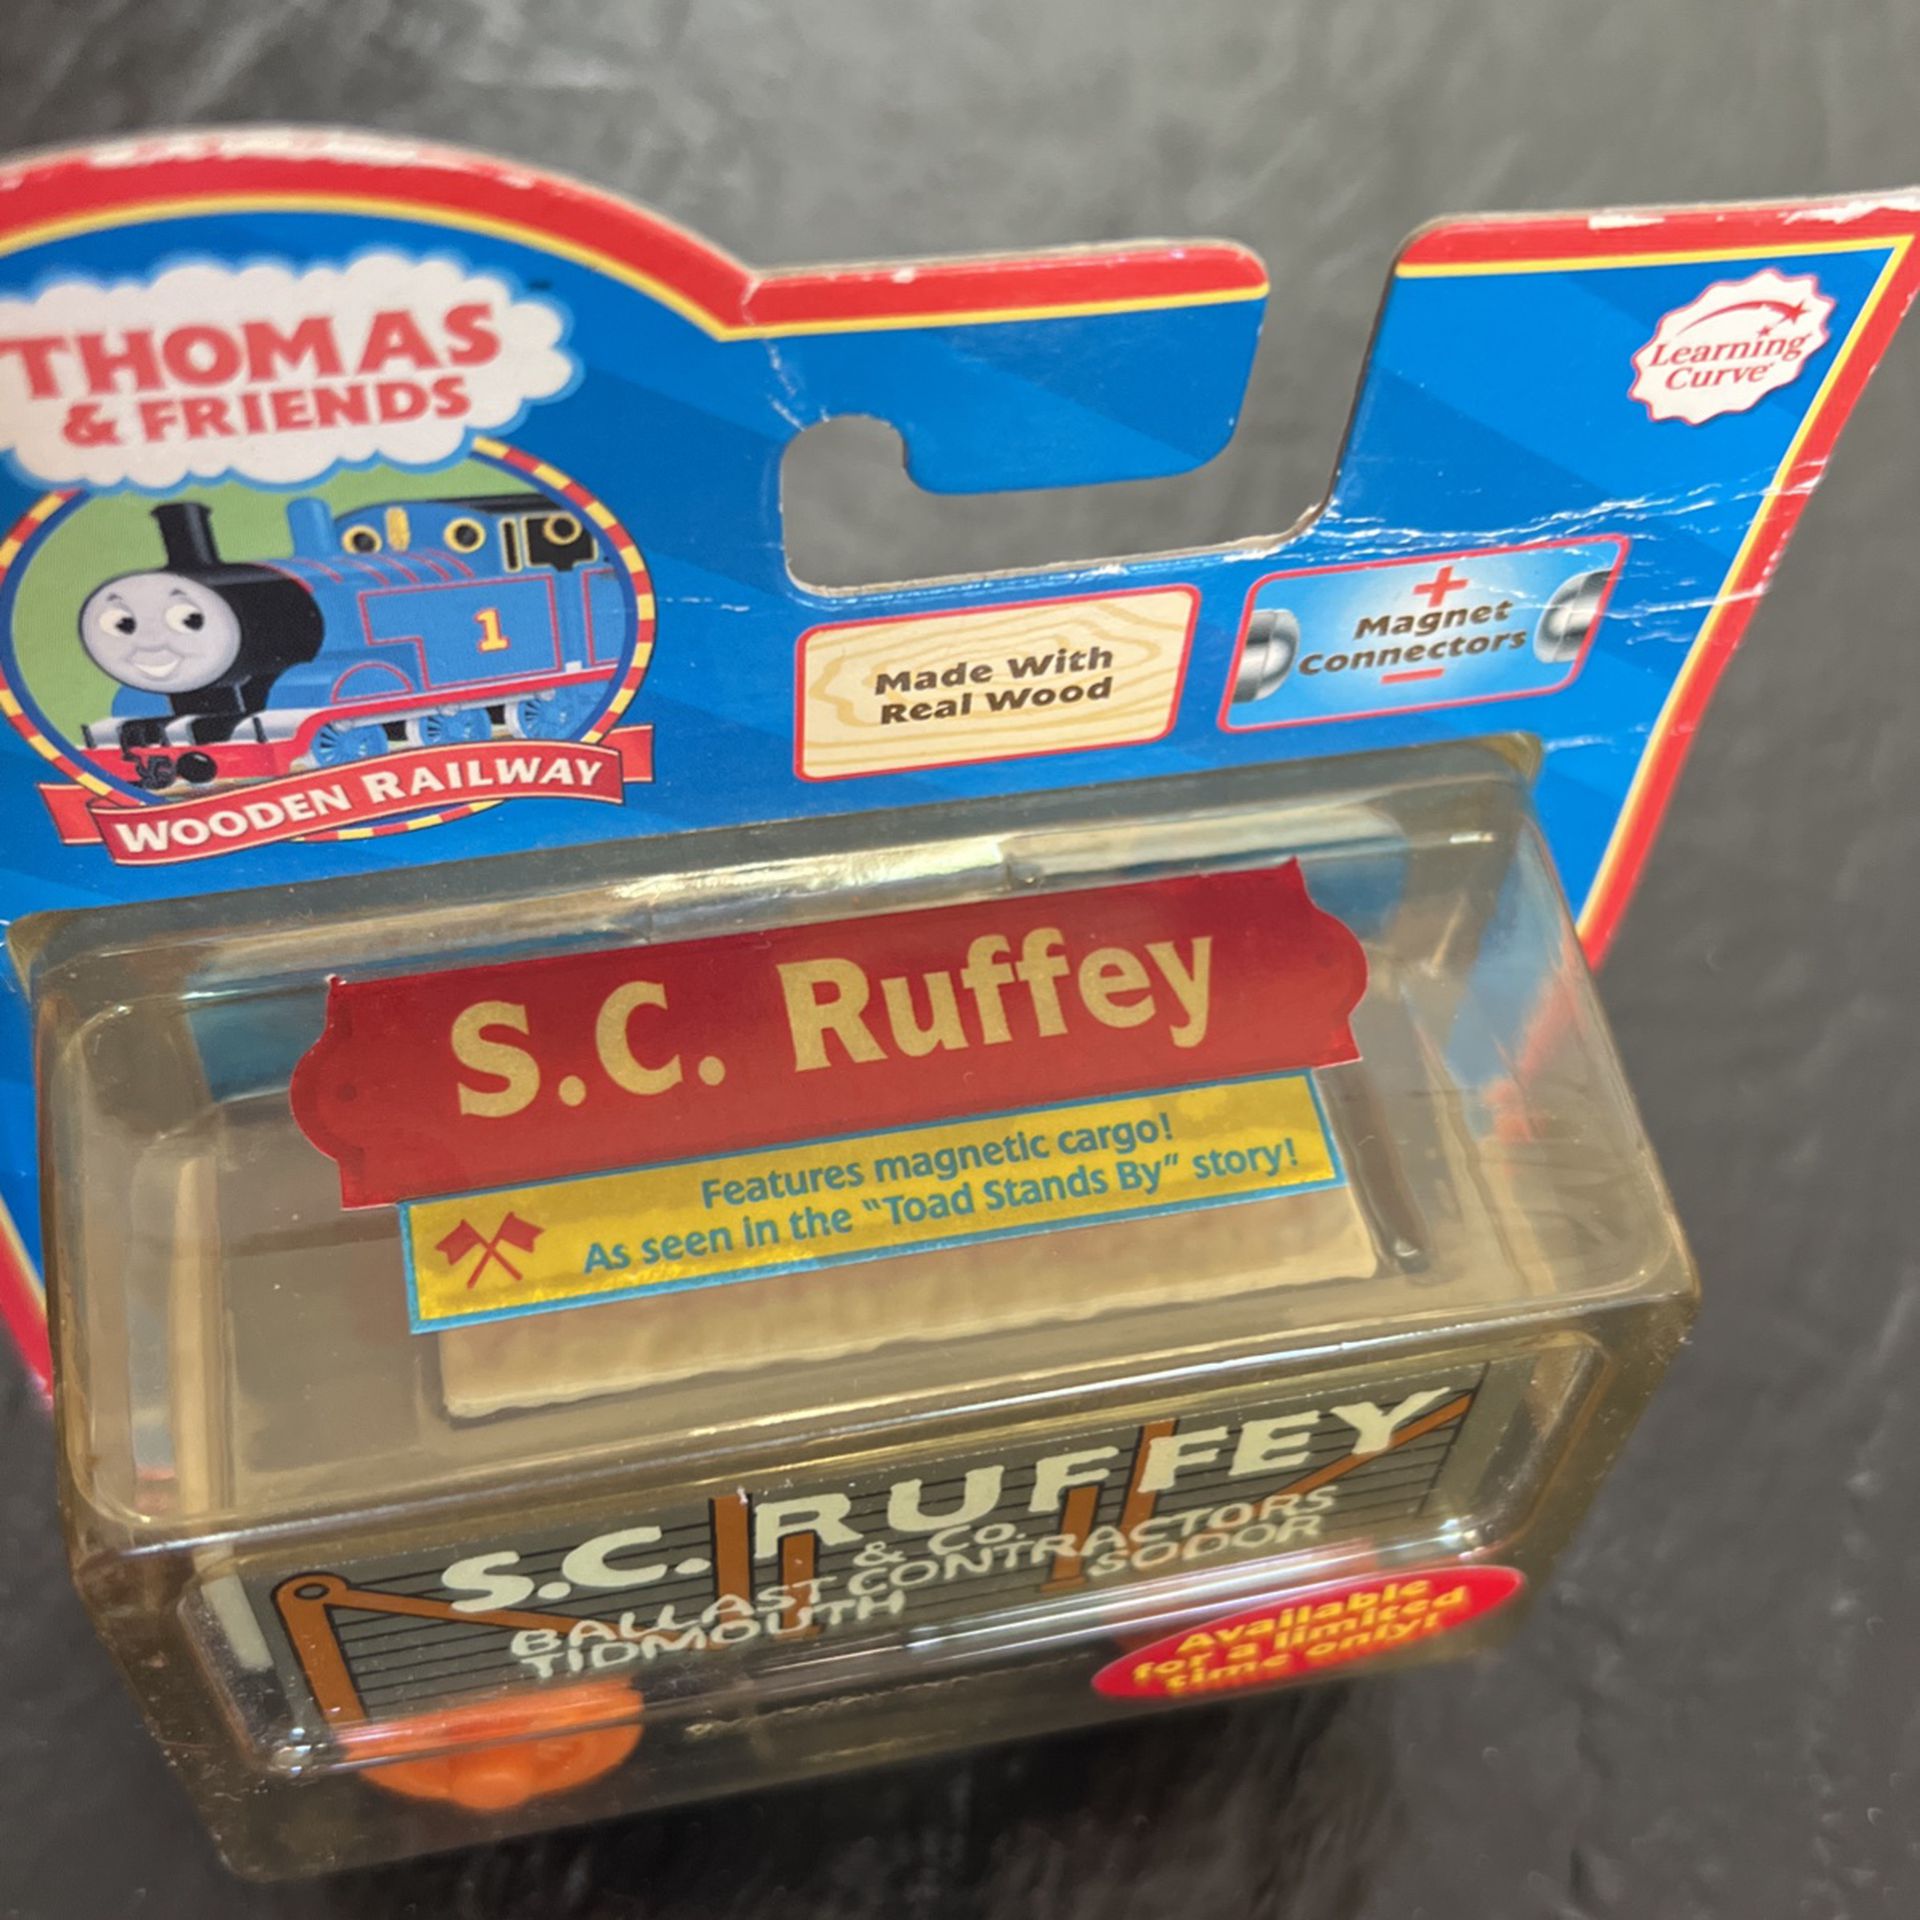 Thomas & Friends S.C. ruffey